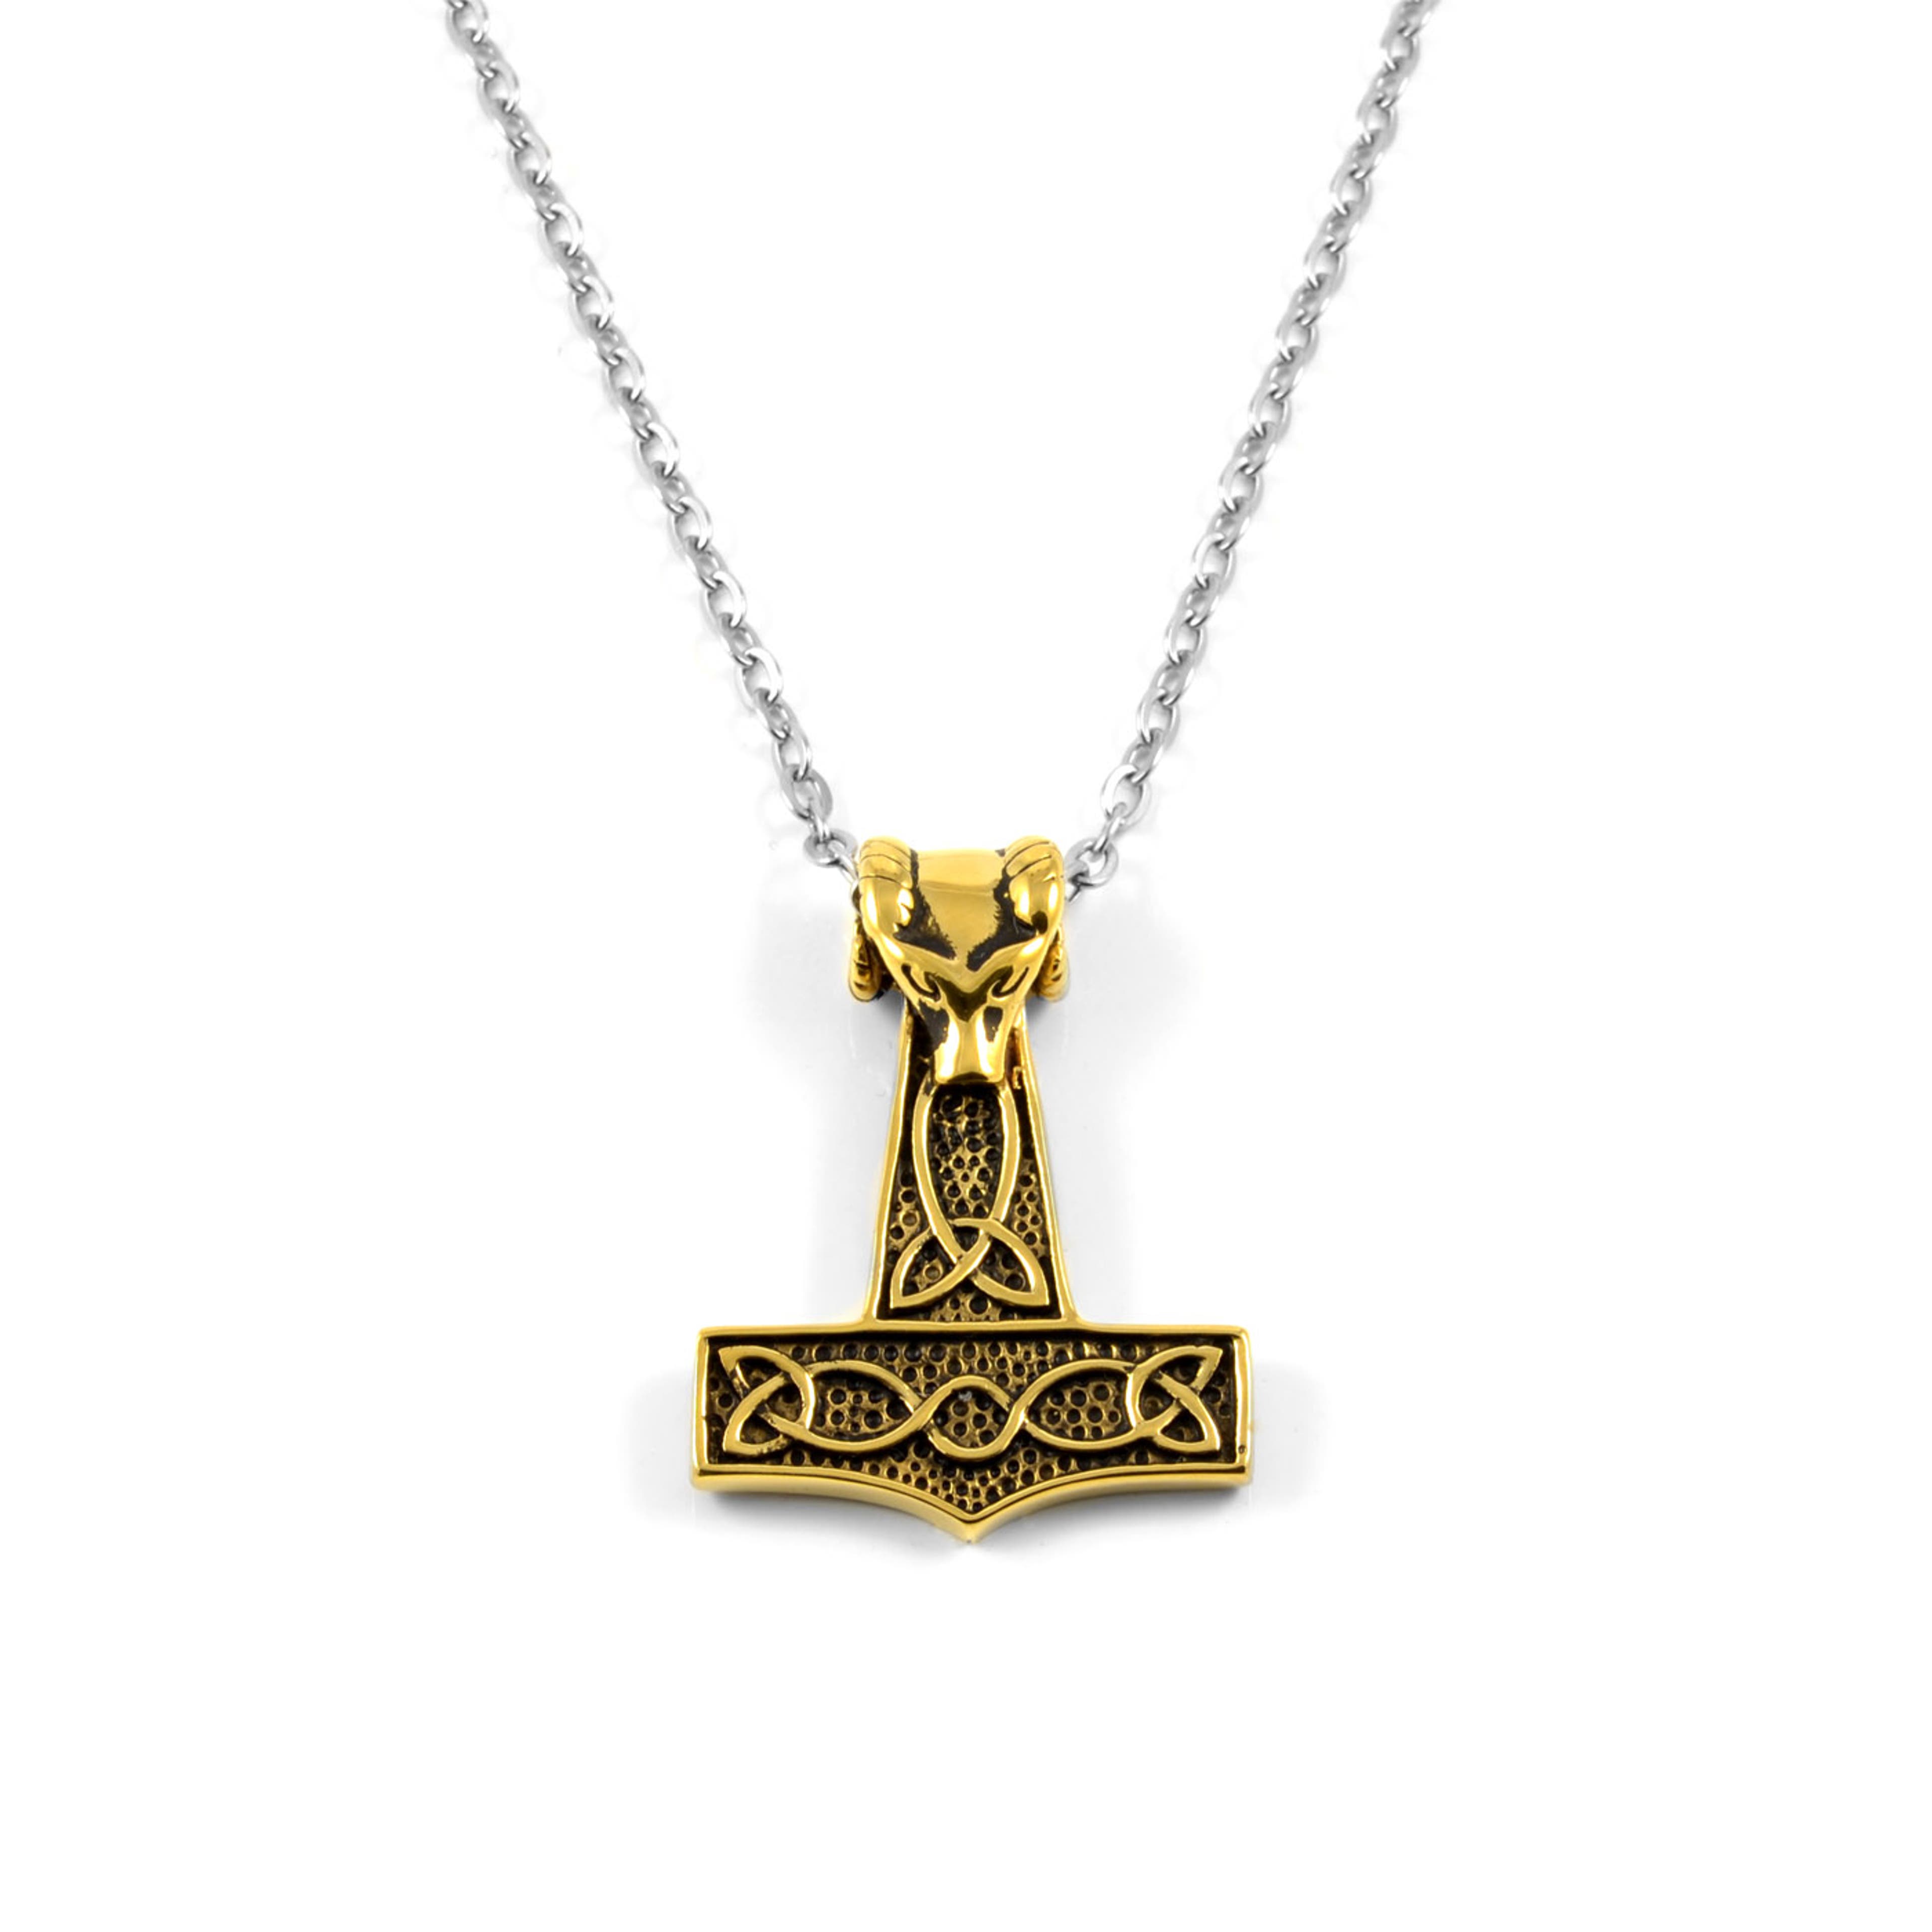 Edelstahl-Halskette mit Thors Hammer in gold